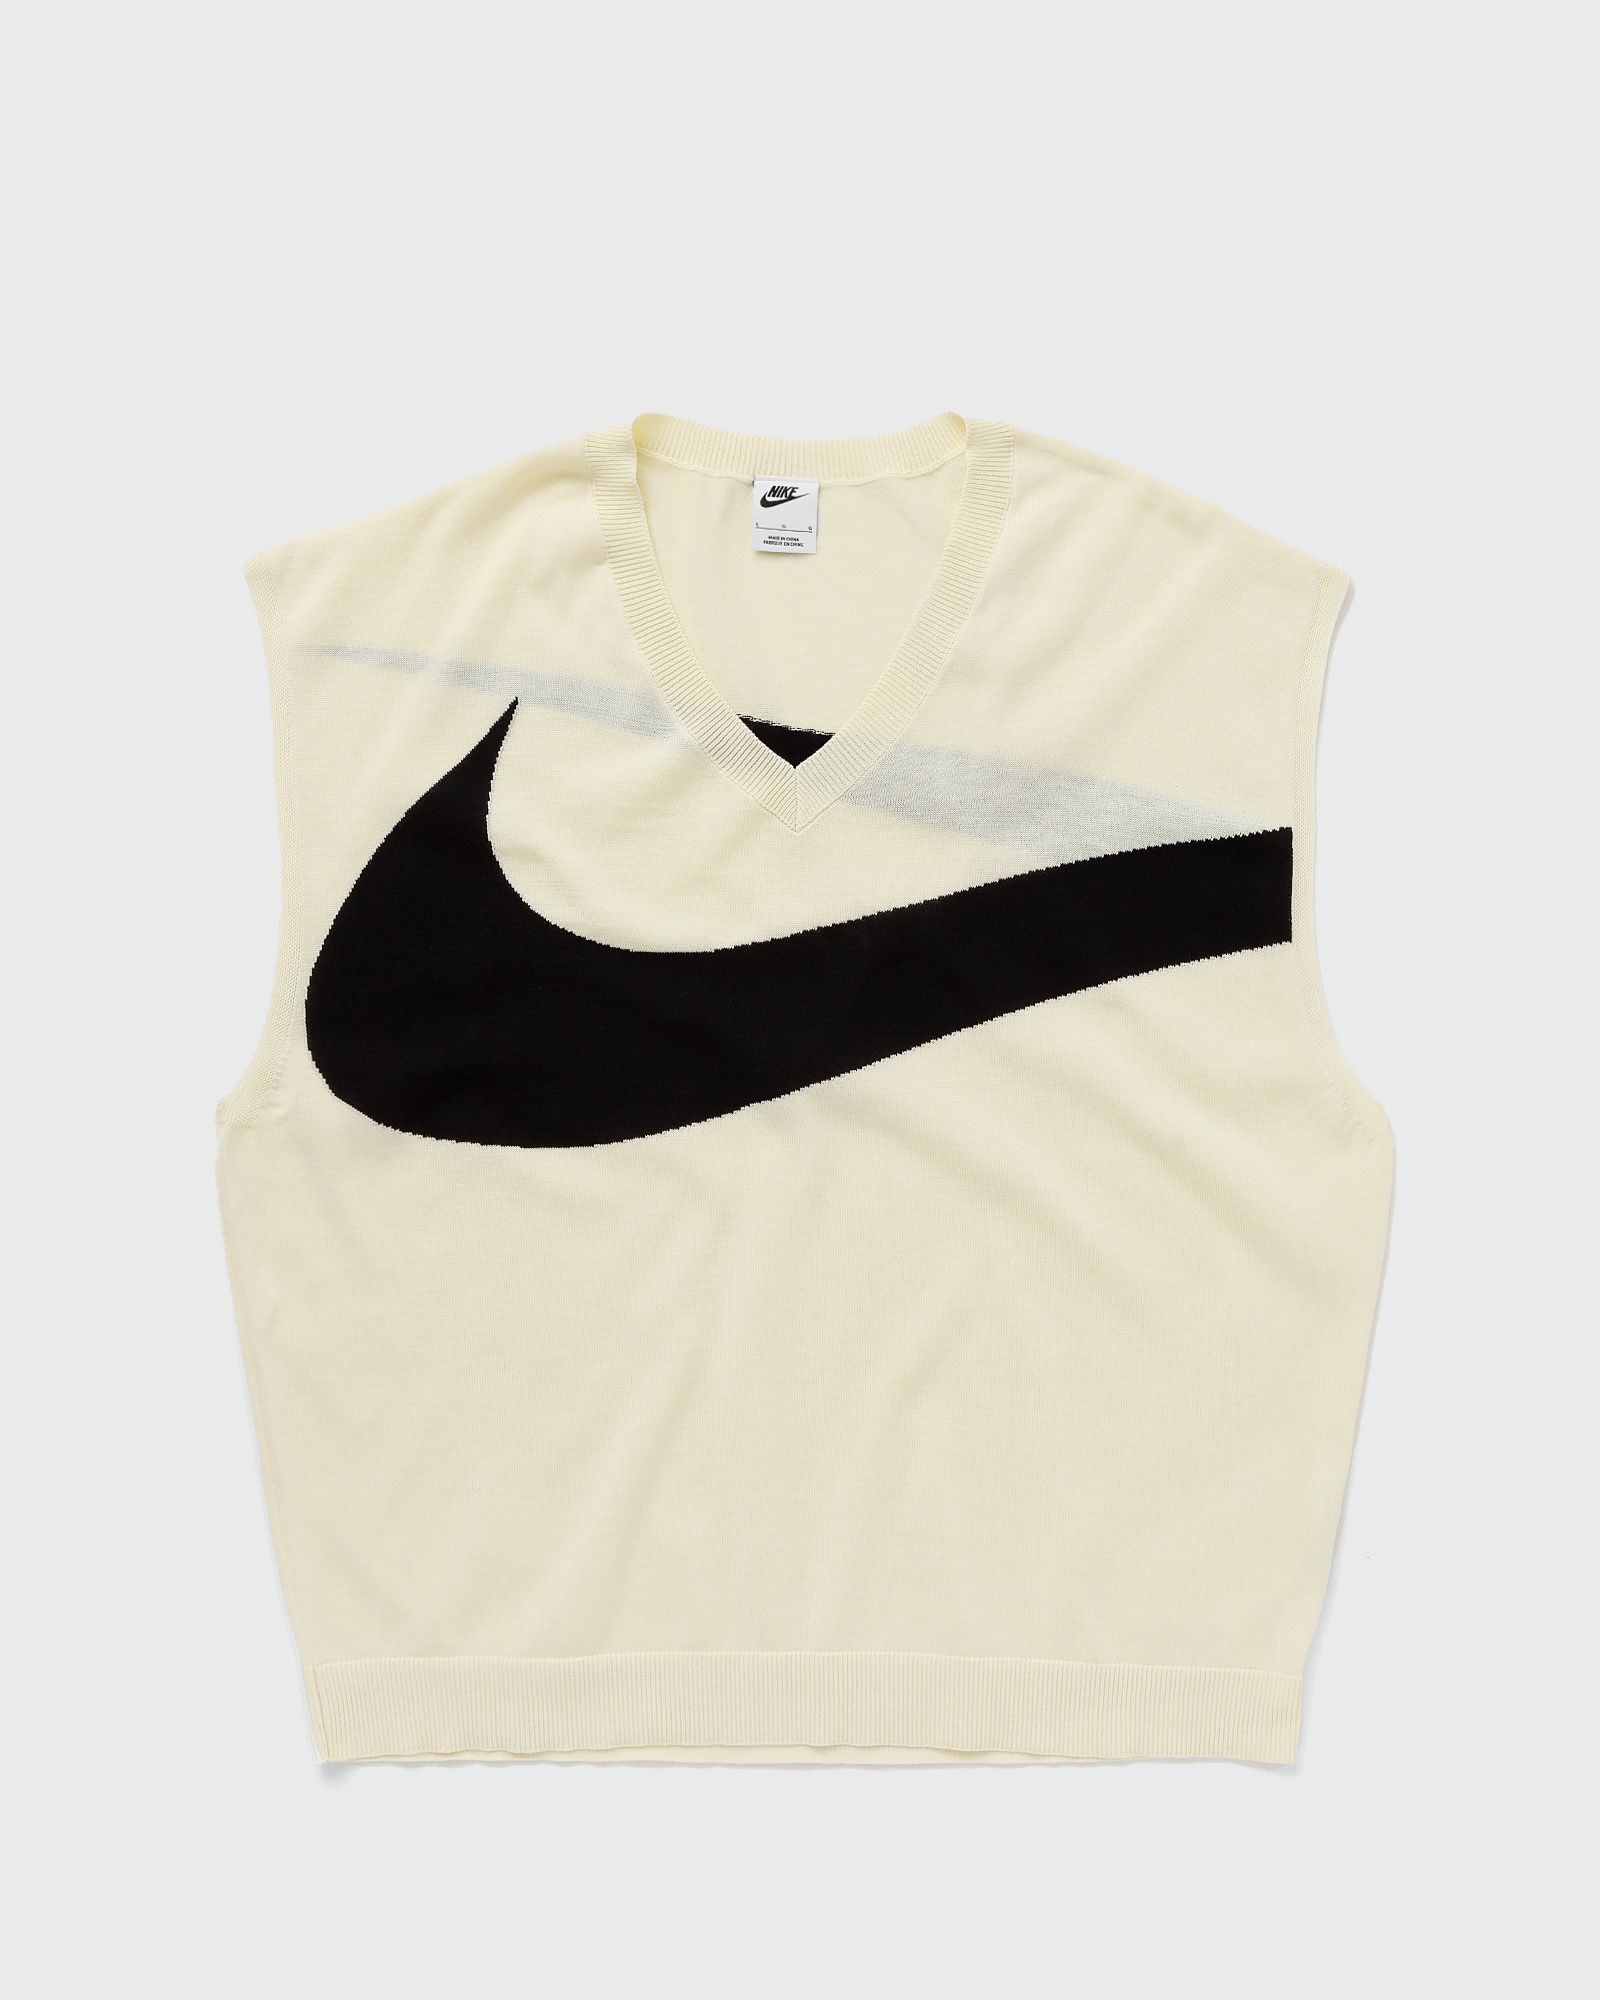 Nike - swoosh sweater vest men vests black|beige in größe:xl